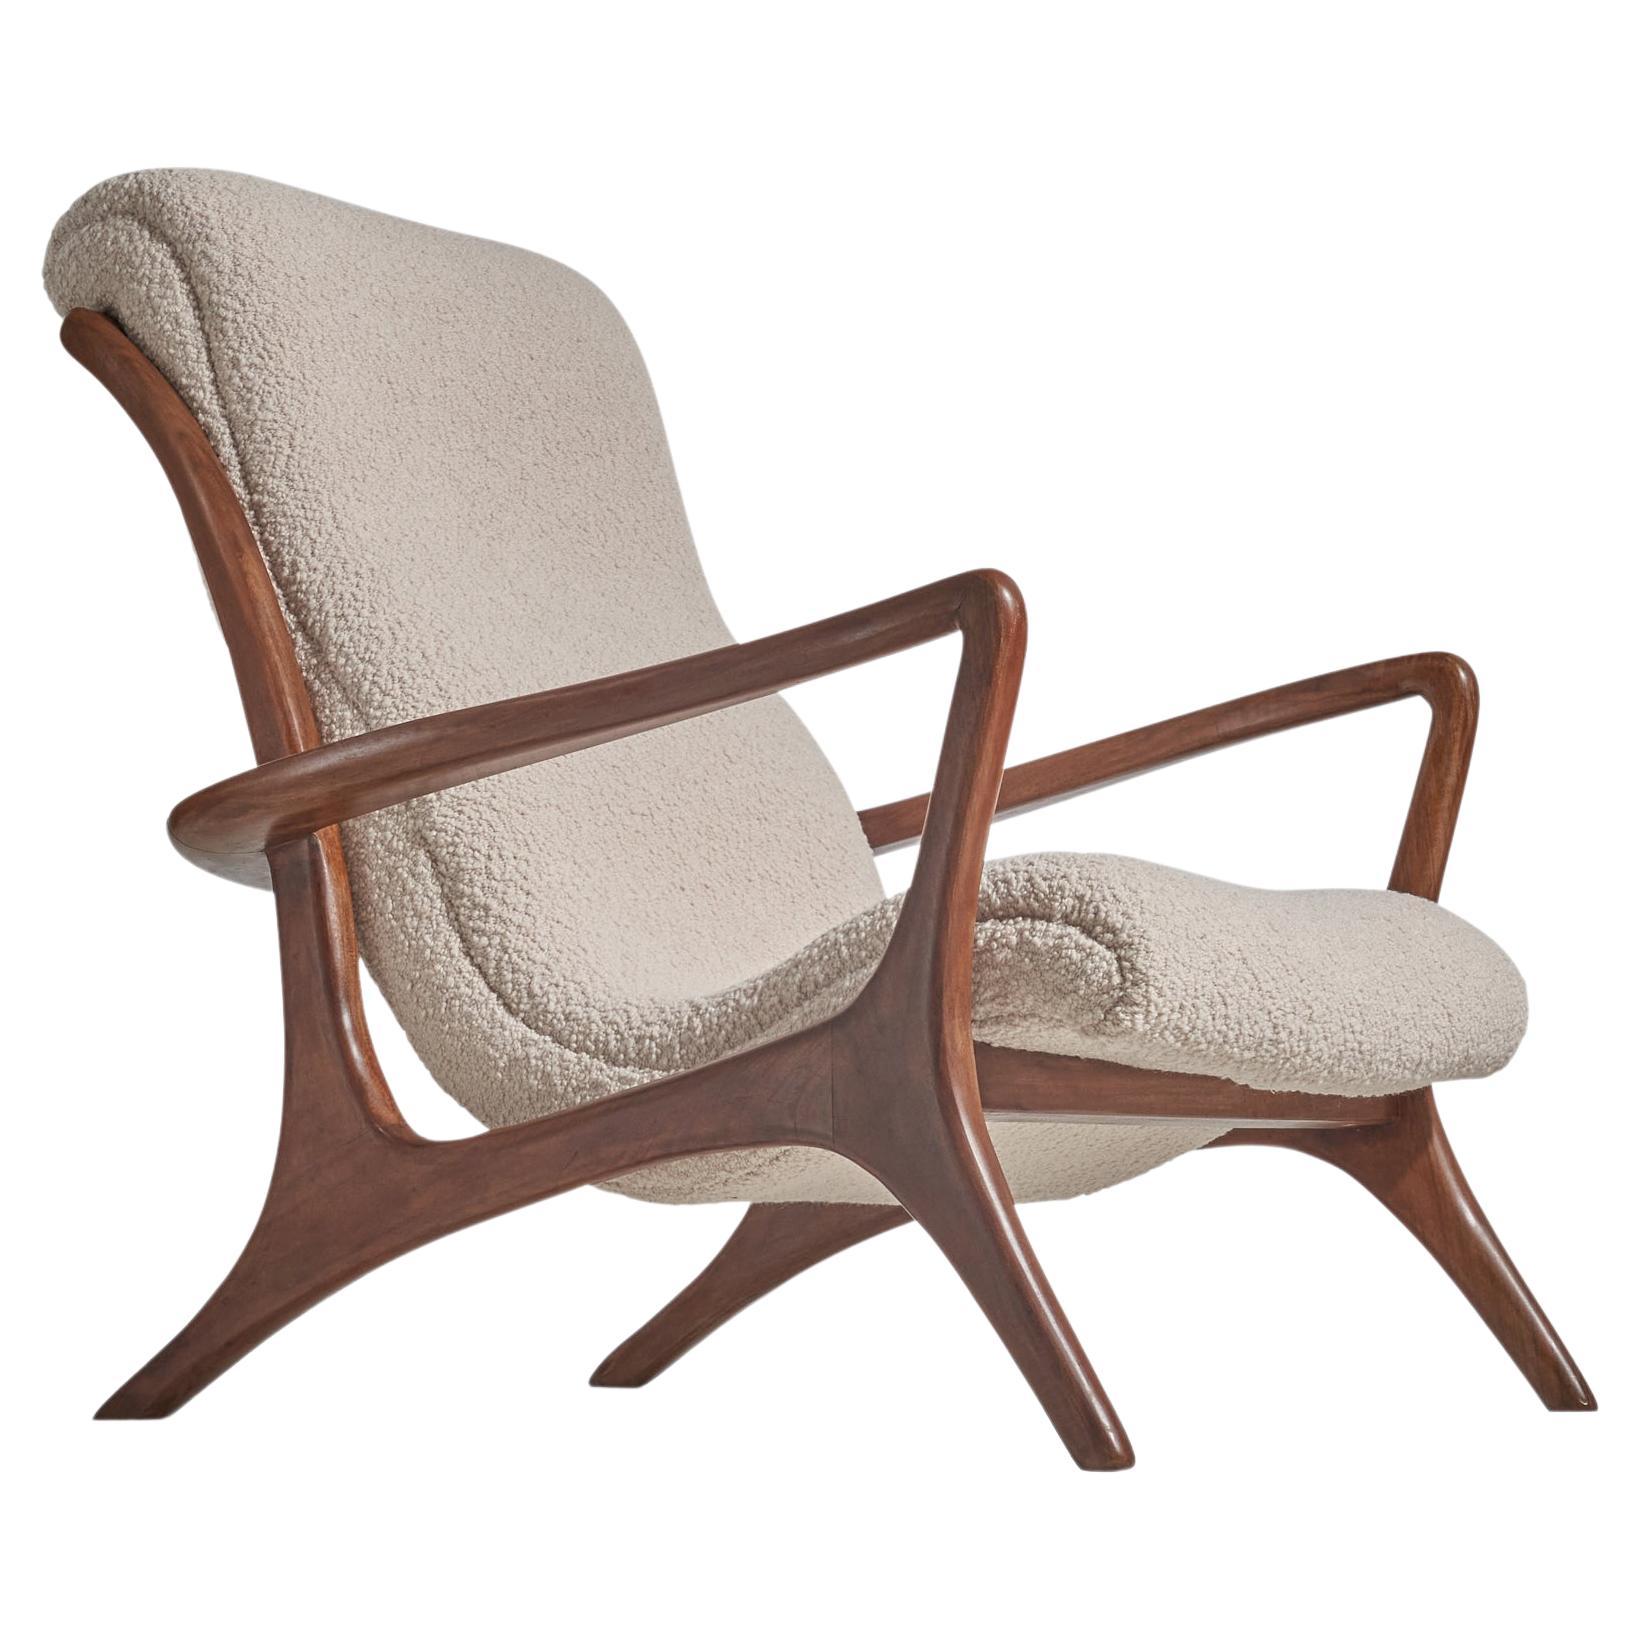 Vladimir Kagan, Rare Lounge Chair, Walnut, White Fabric, Kagan Designs C. 1950